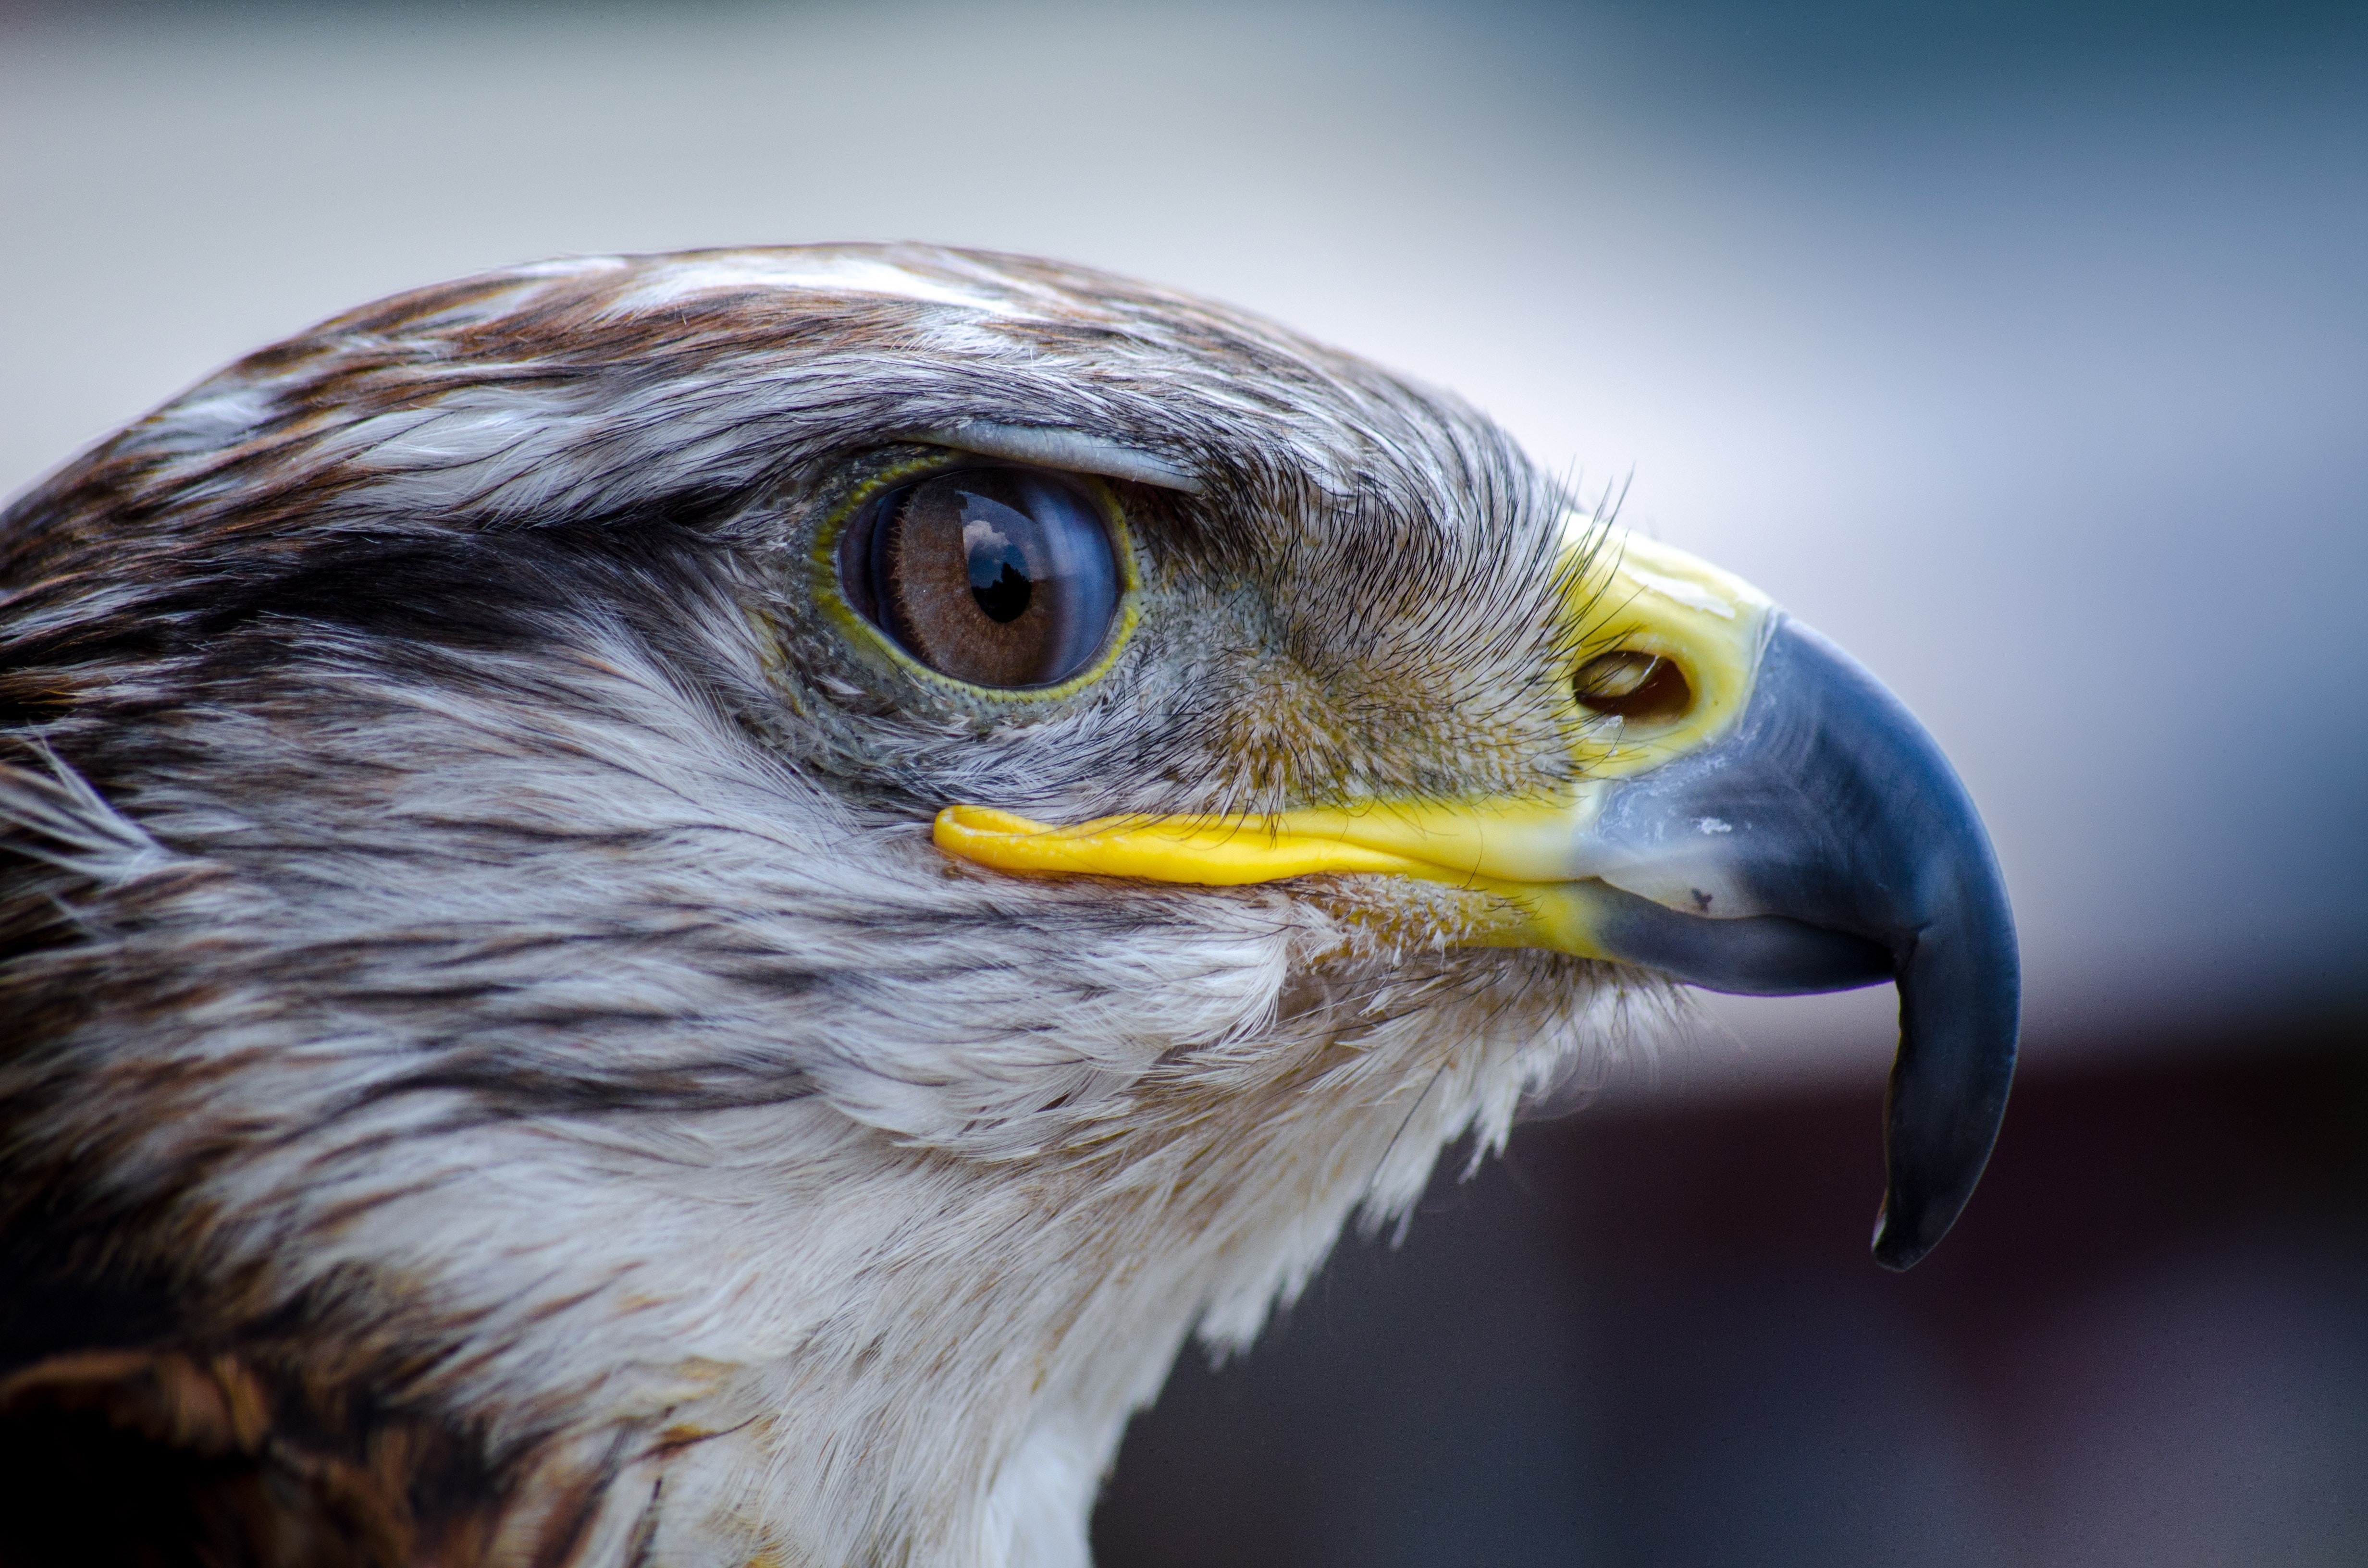 White and brown eagle portrait photo